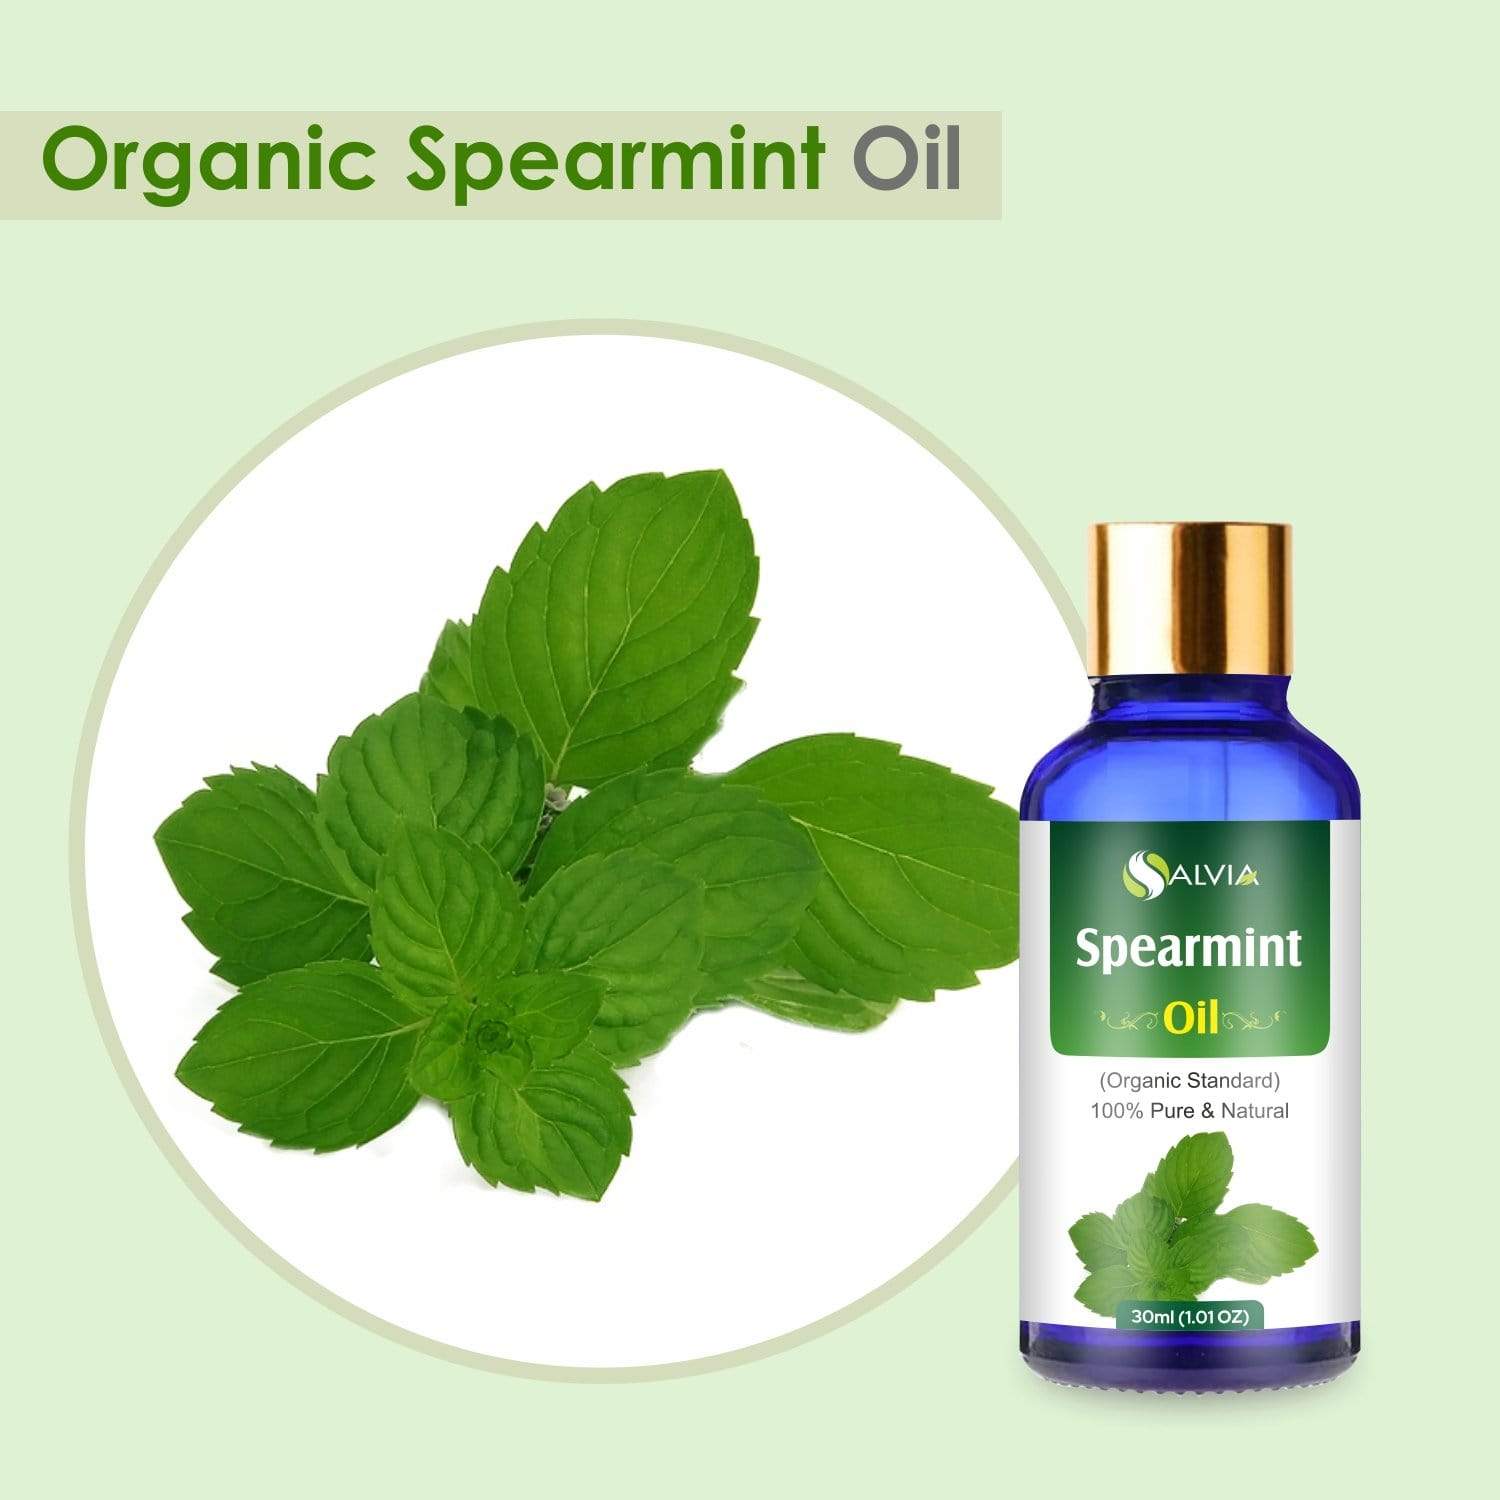 Organic Spearmint Essential Oil benefits 